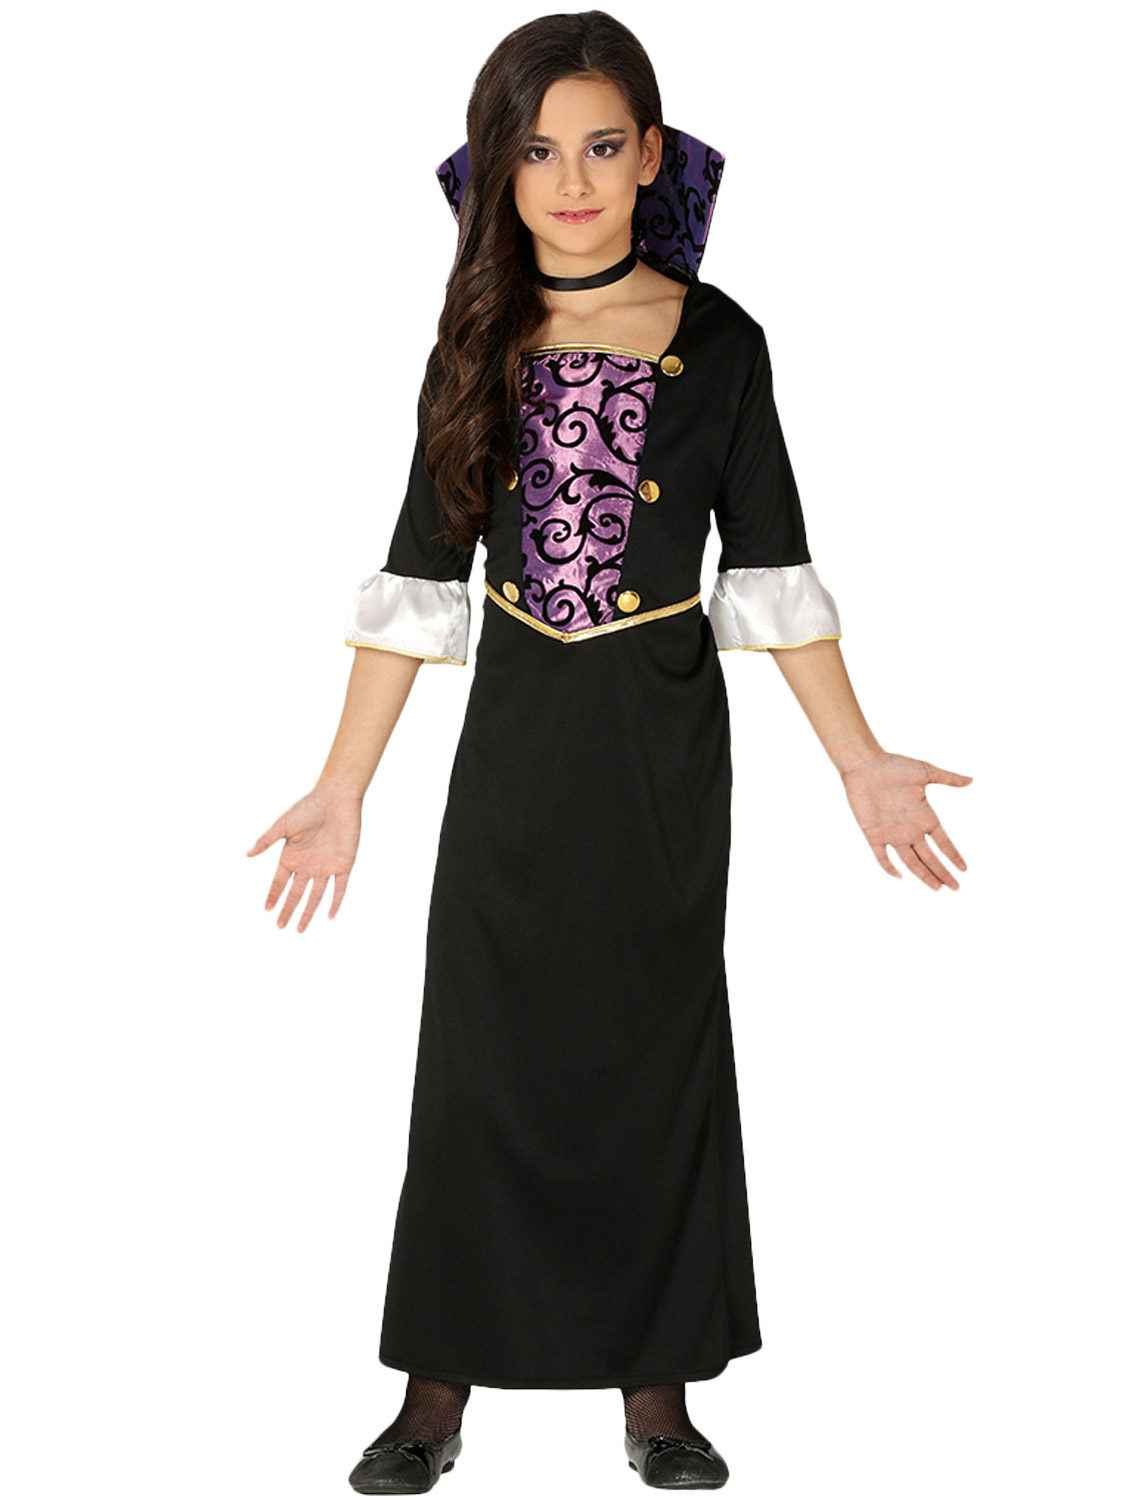 Girls Long Gothic Vampire Costume Child Halloween Fancy Dress Kids